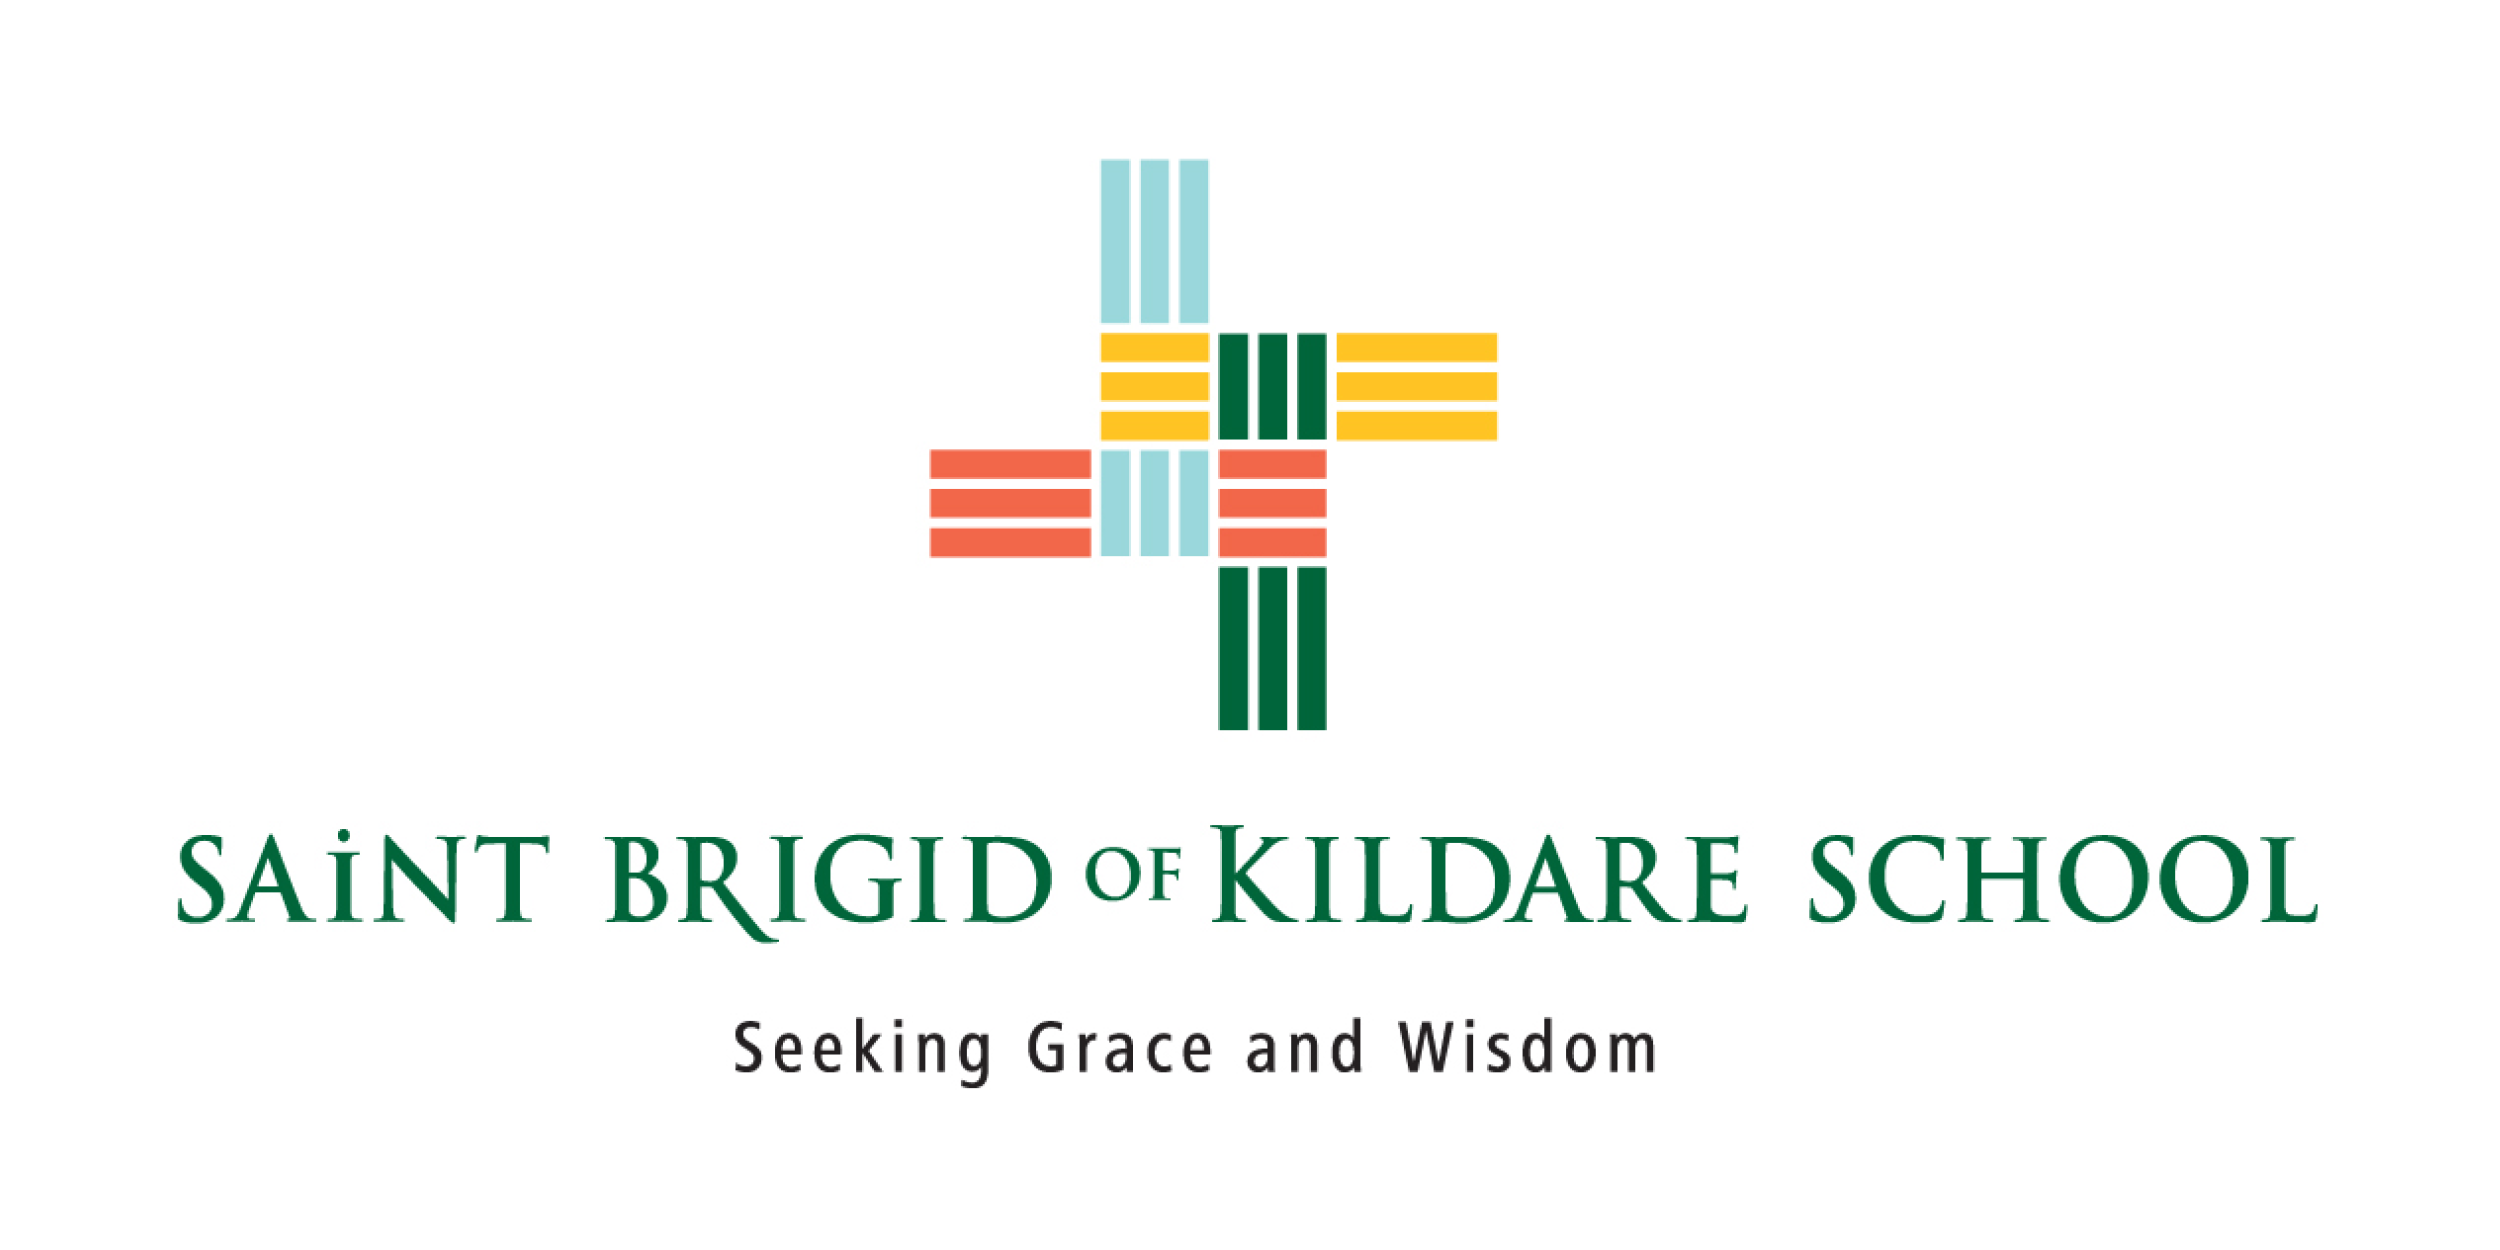 ST BRIGID OF KILDARE